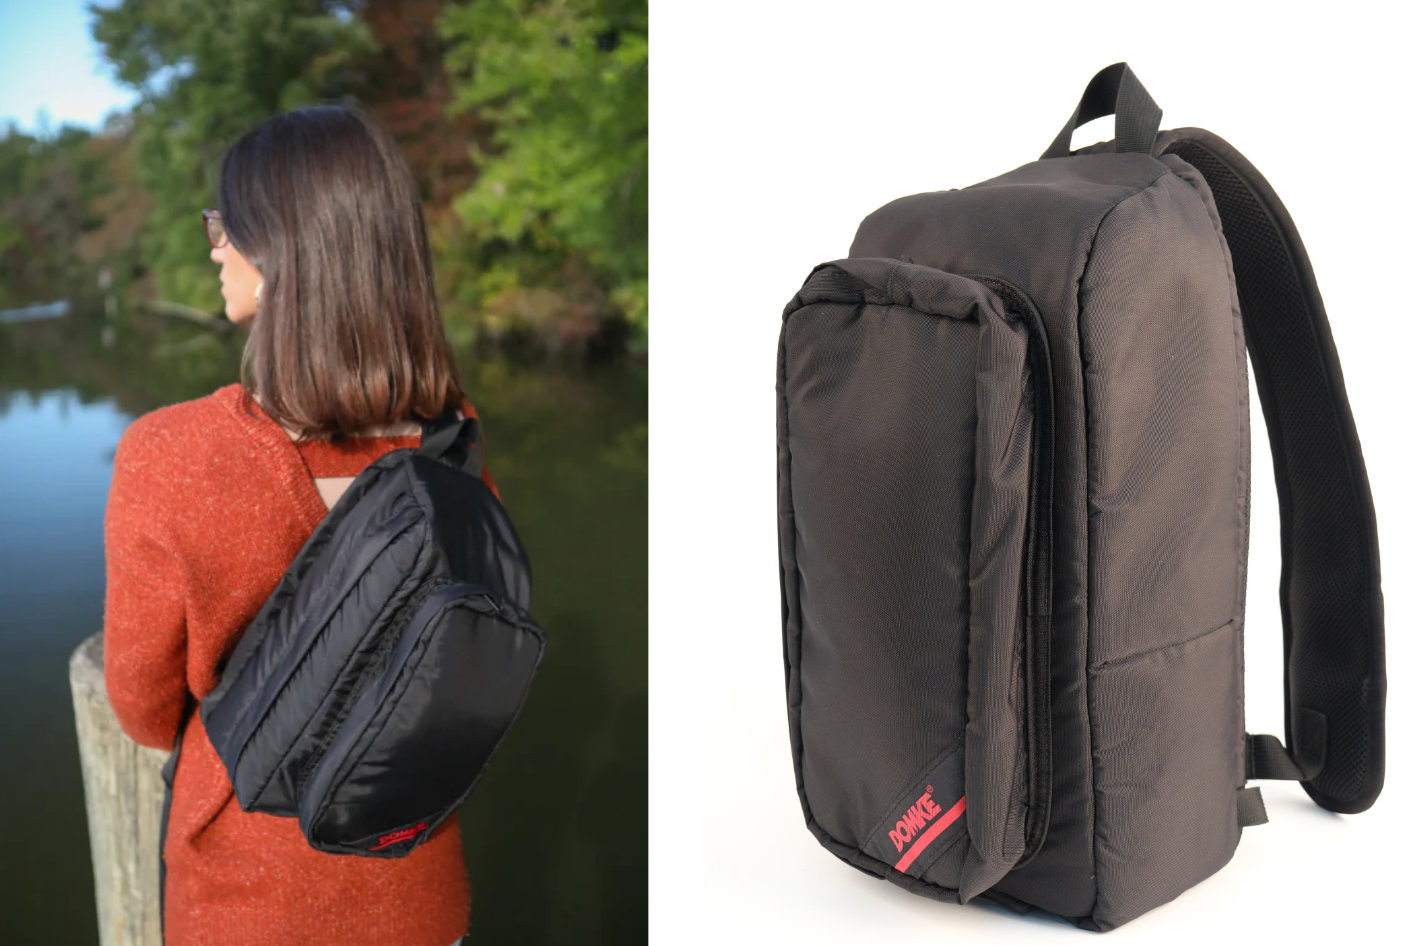 Tiffen introduces new Domke black vest, sling bag and tech pouch